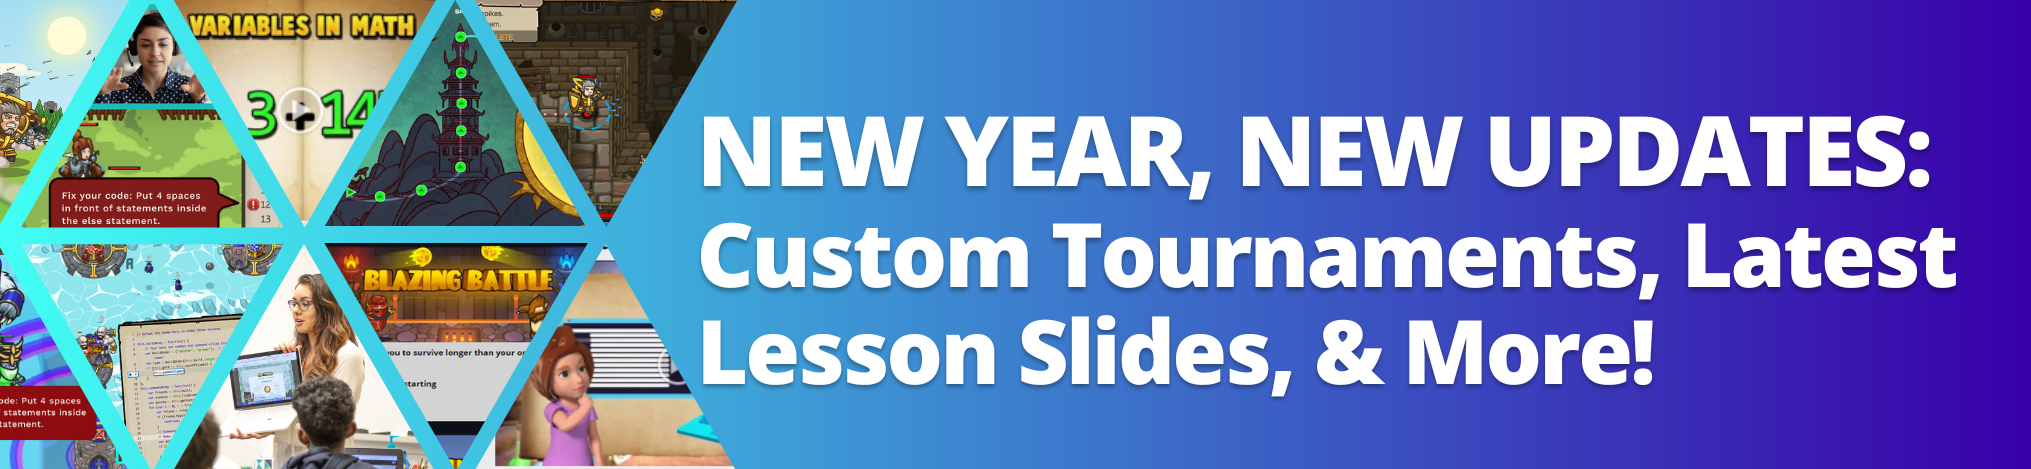 New Year, New Updates: Custom Tournaments, Latest Lesson Slides, & More!